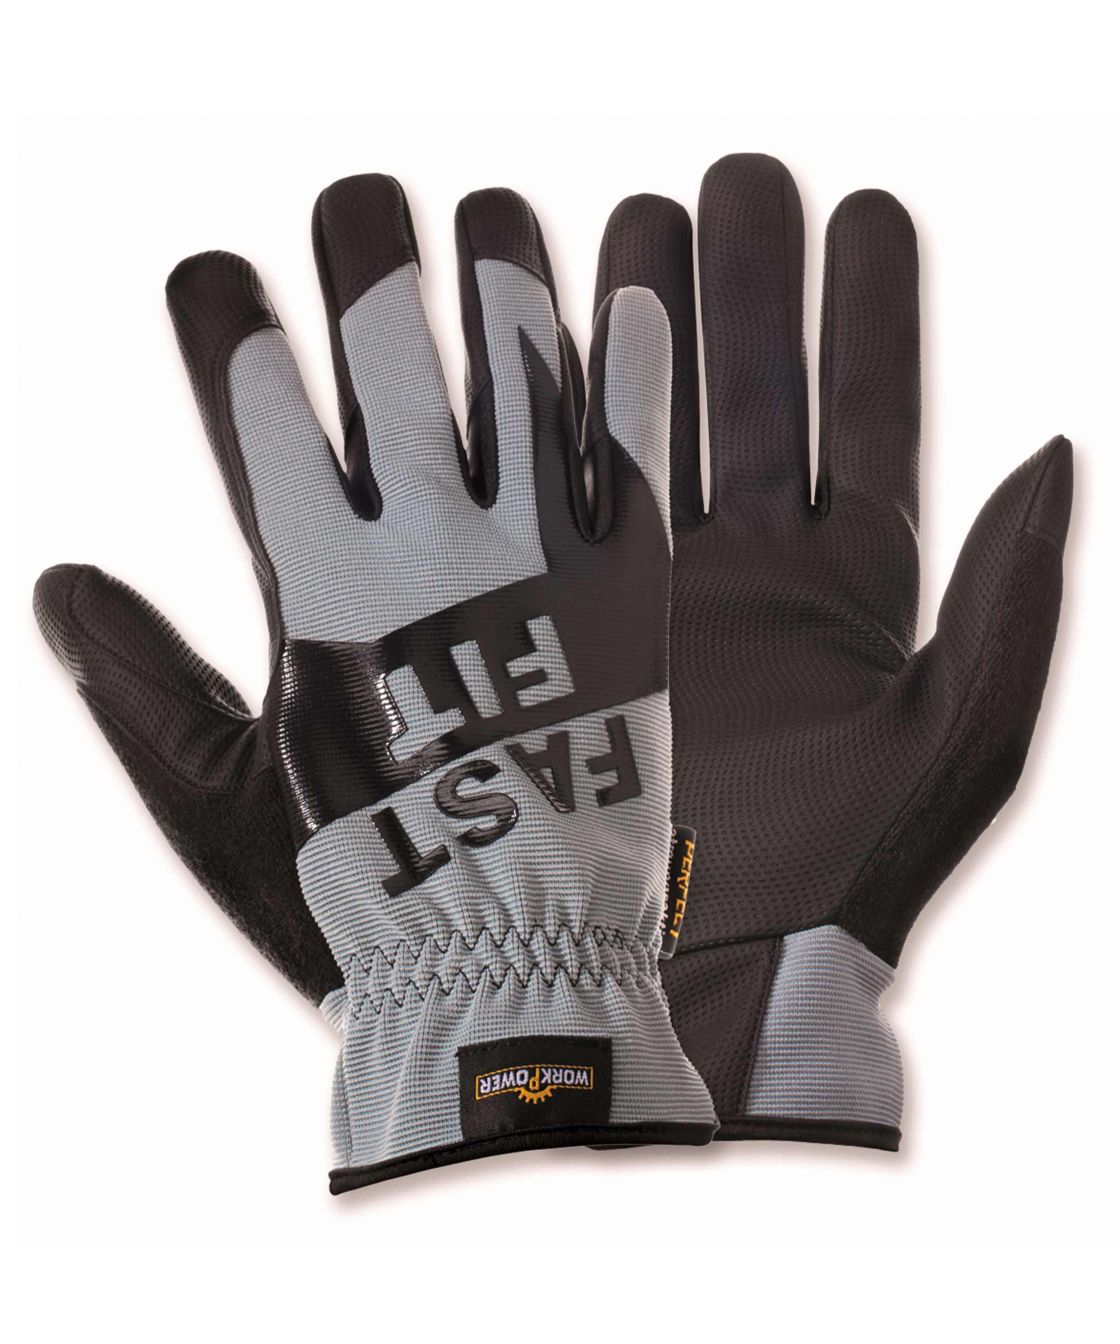 Mechaniker Handschuh Perfect, grau/schwarz grau/schwarz